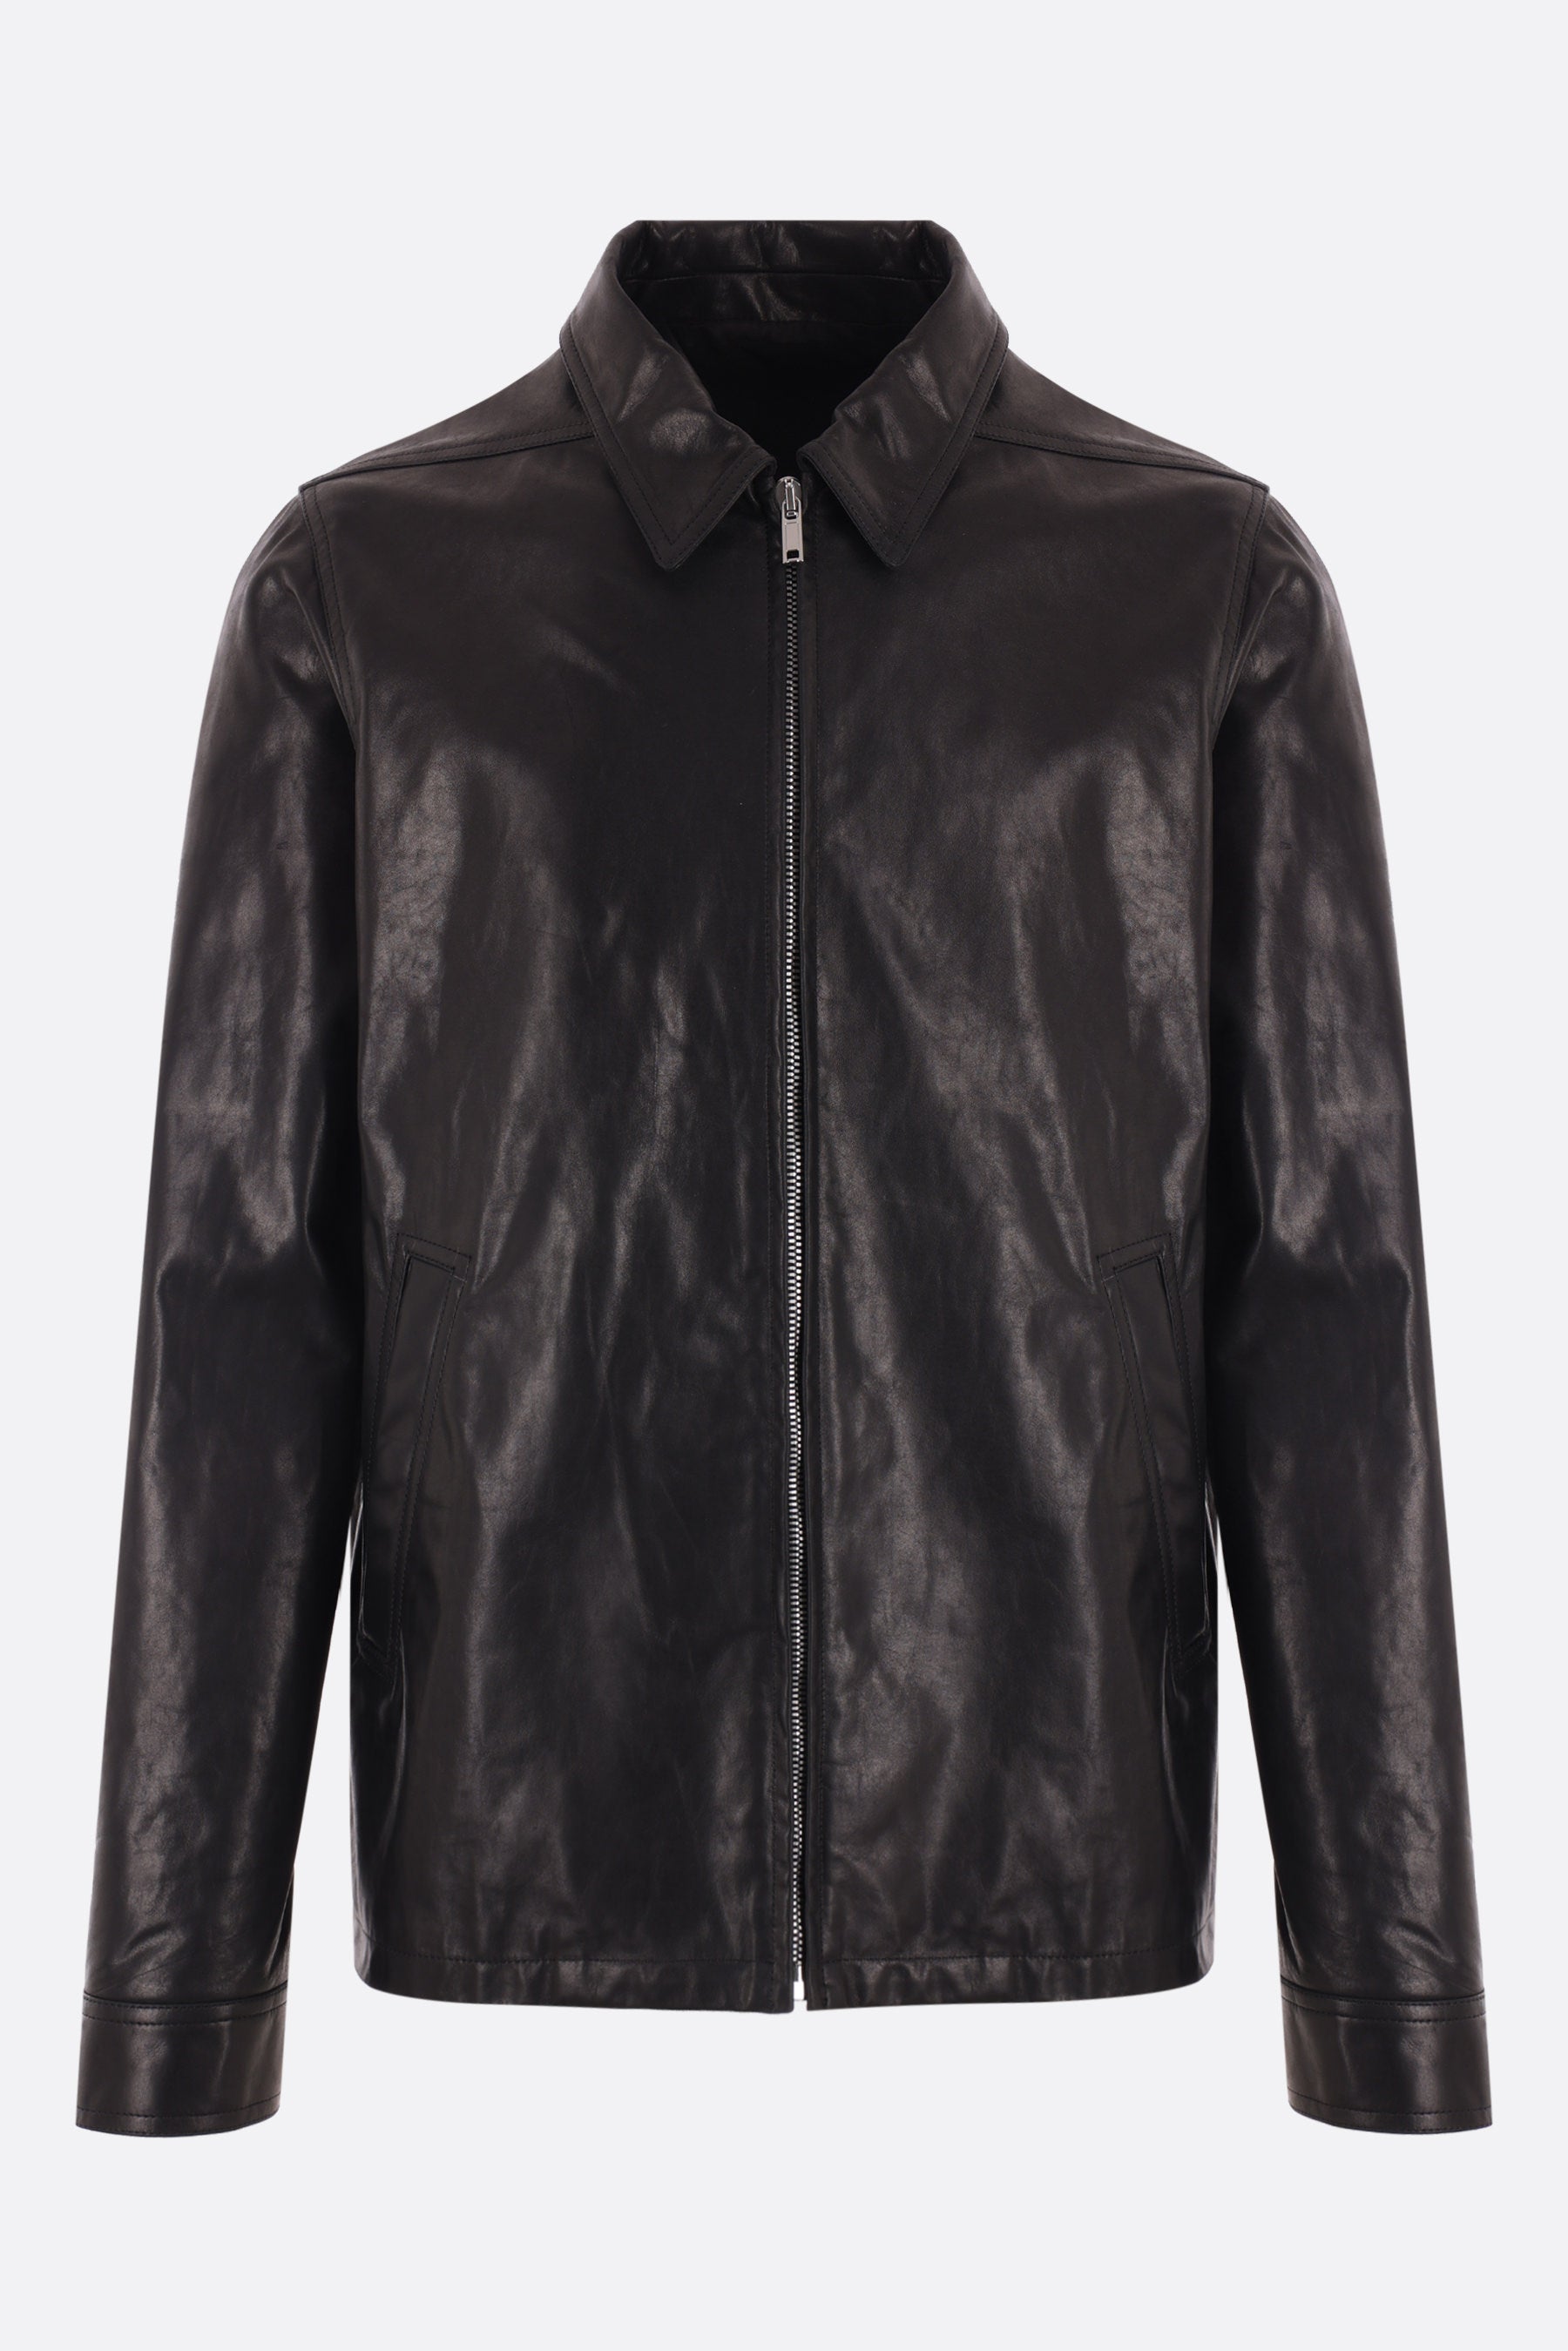 Brad leather full-zip jacket